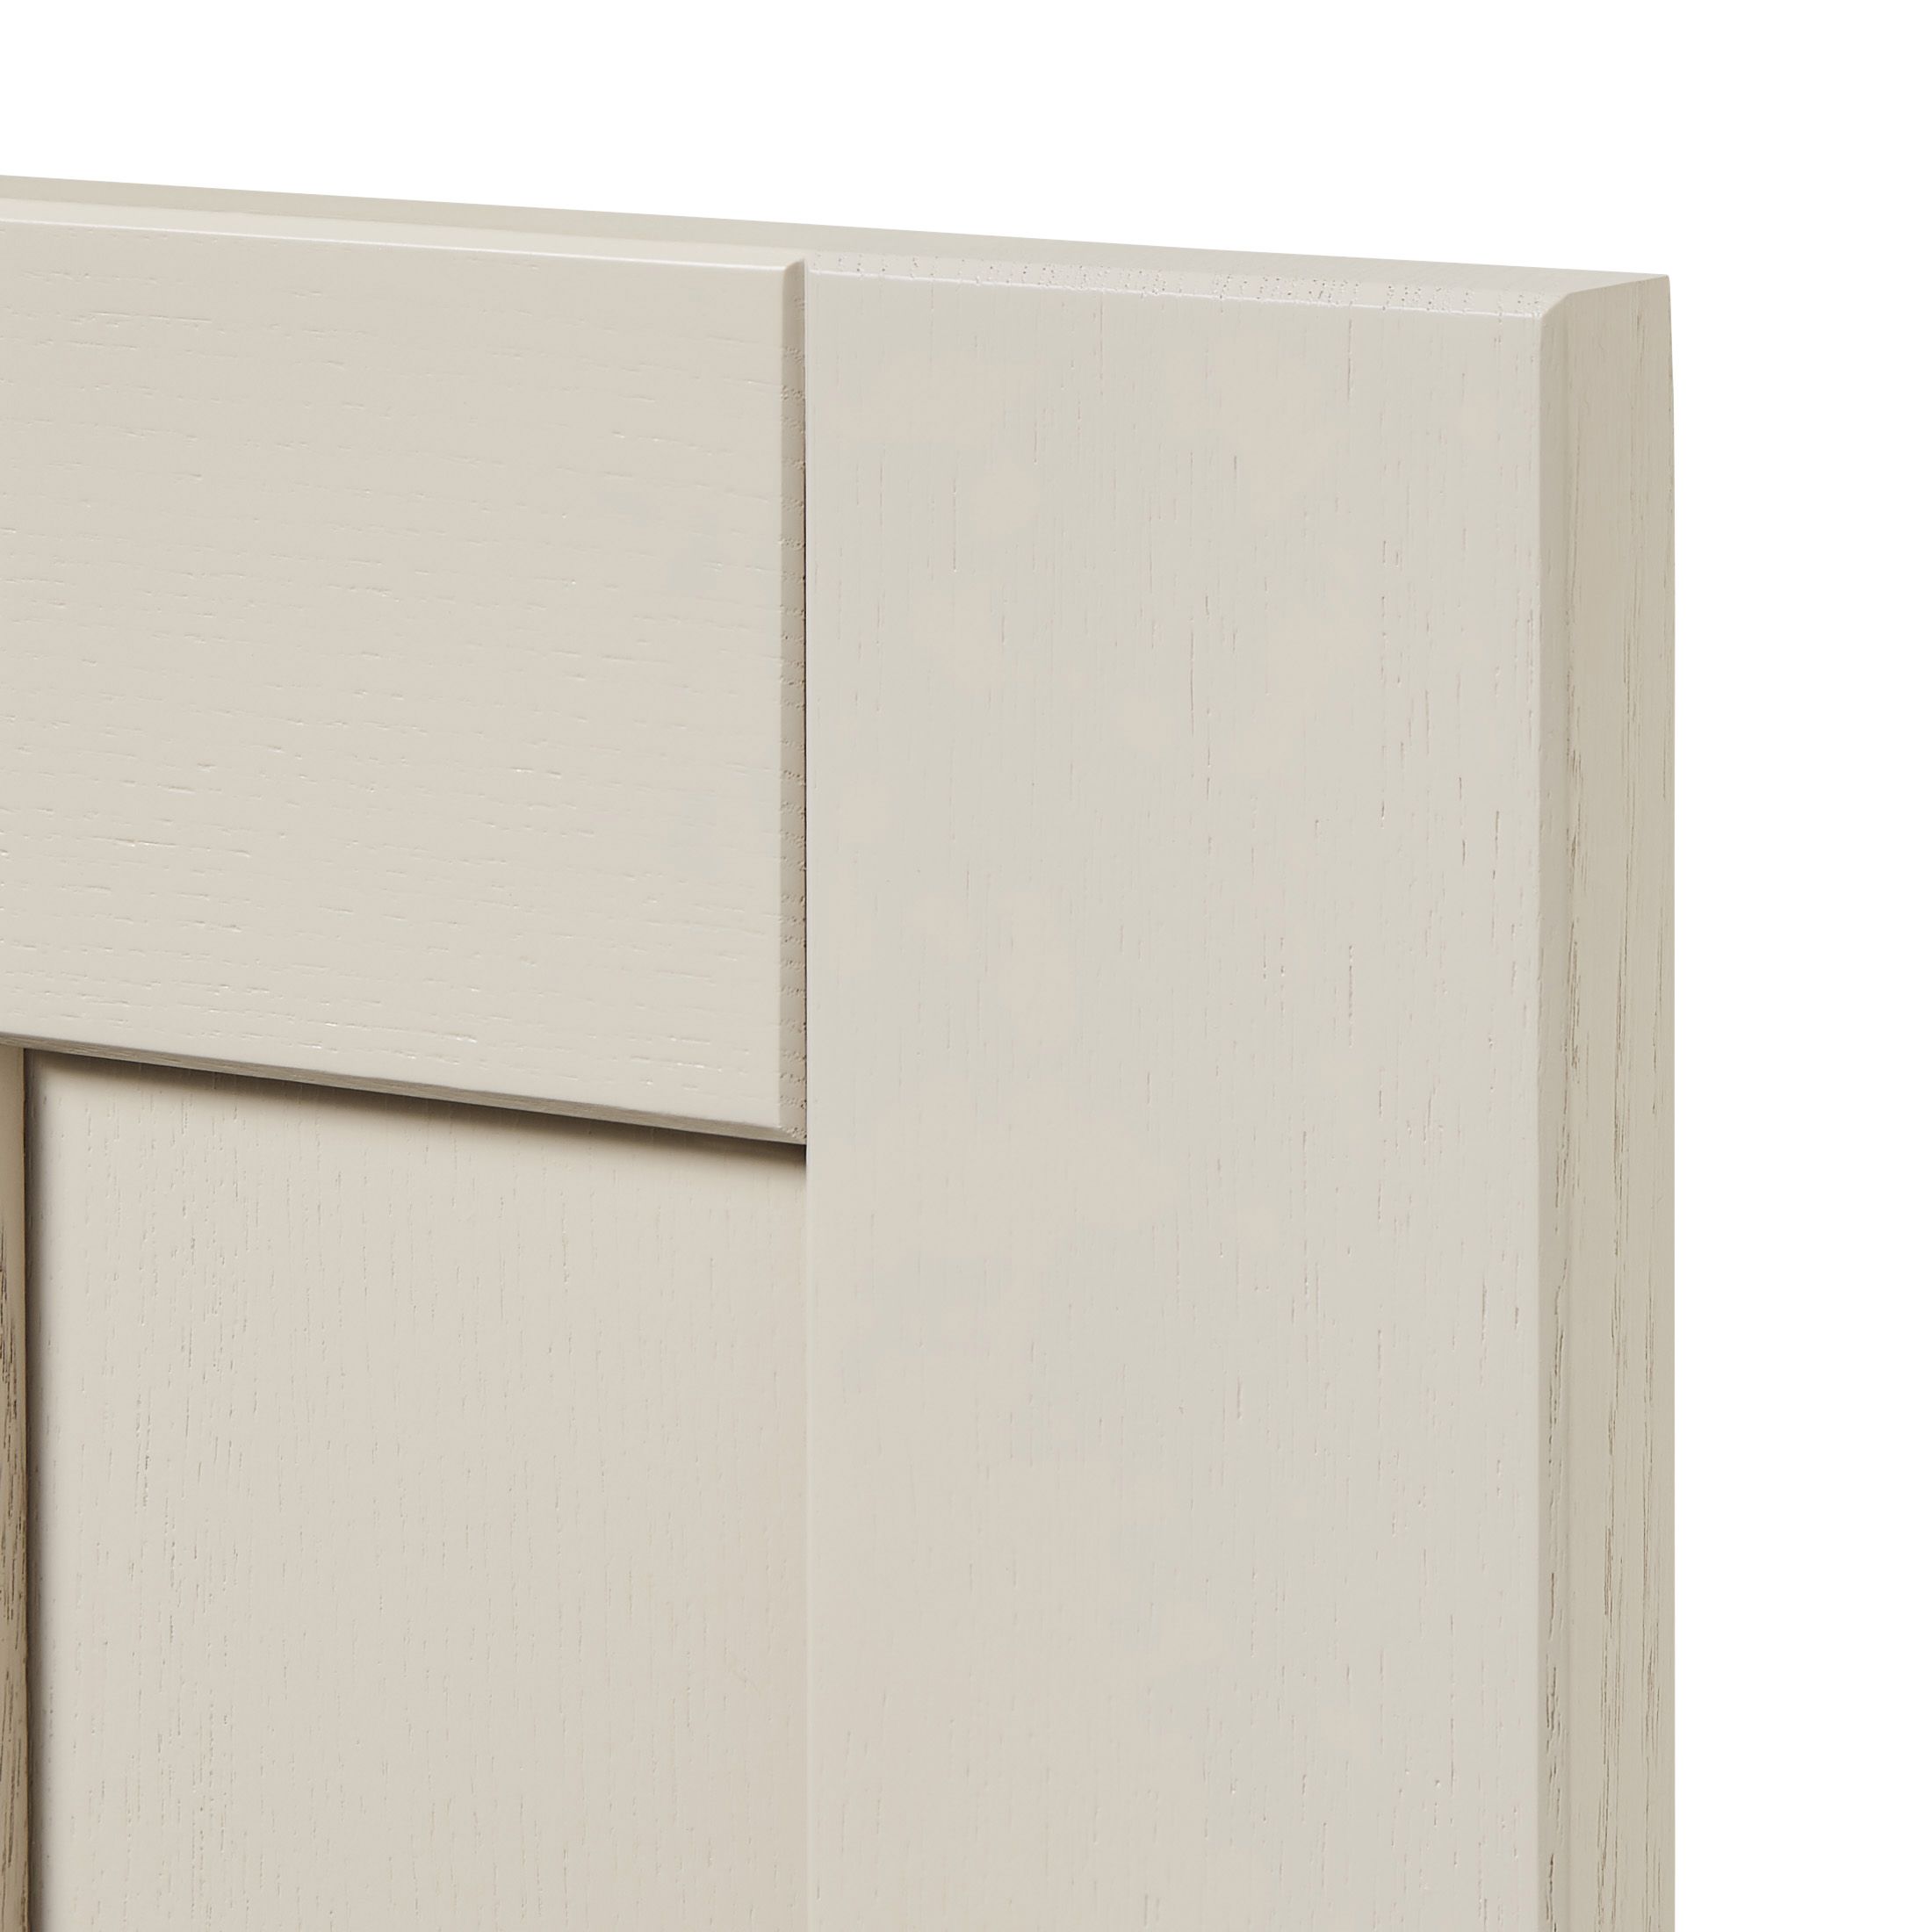 GoodHome Verbena Matt cashmere painted natural ash shaker Highline Cabinet door (W)400mm (H)715mm (T)20mm